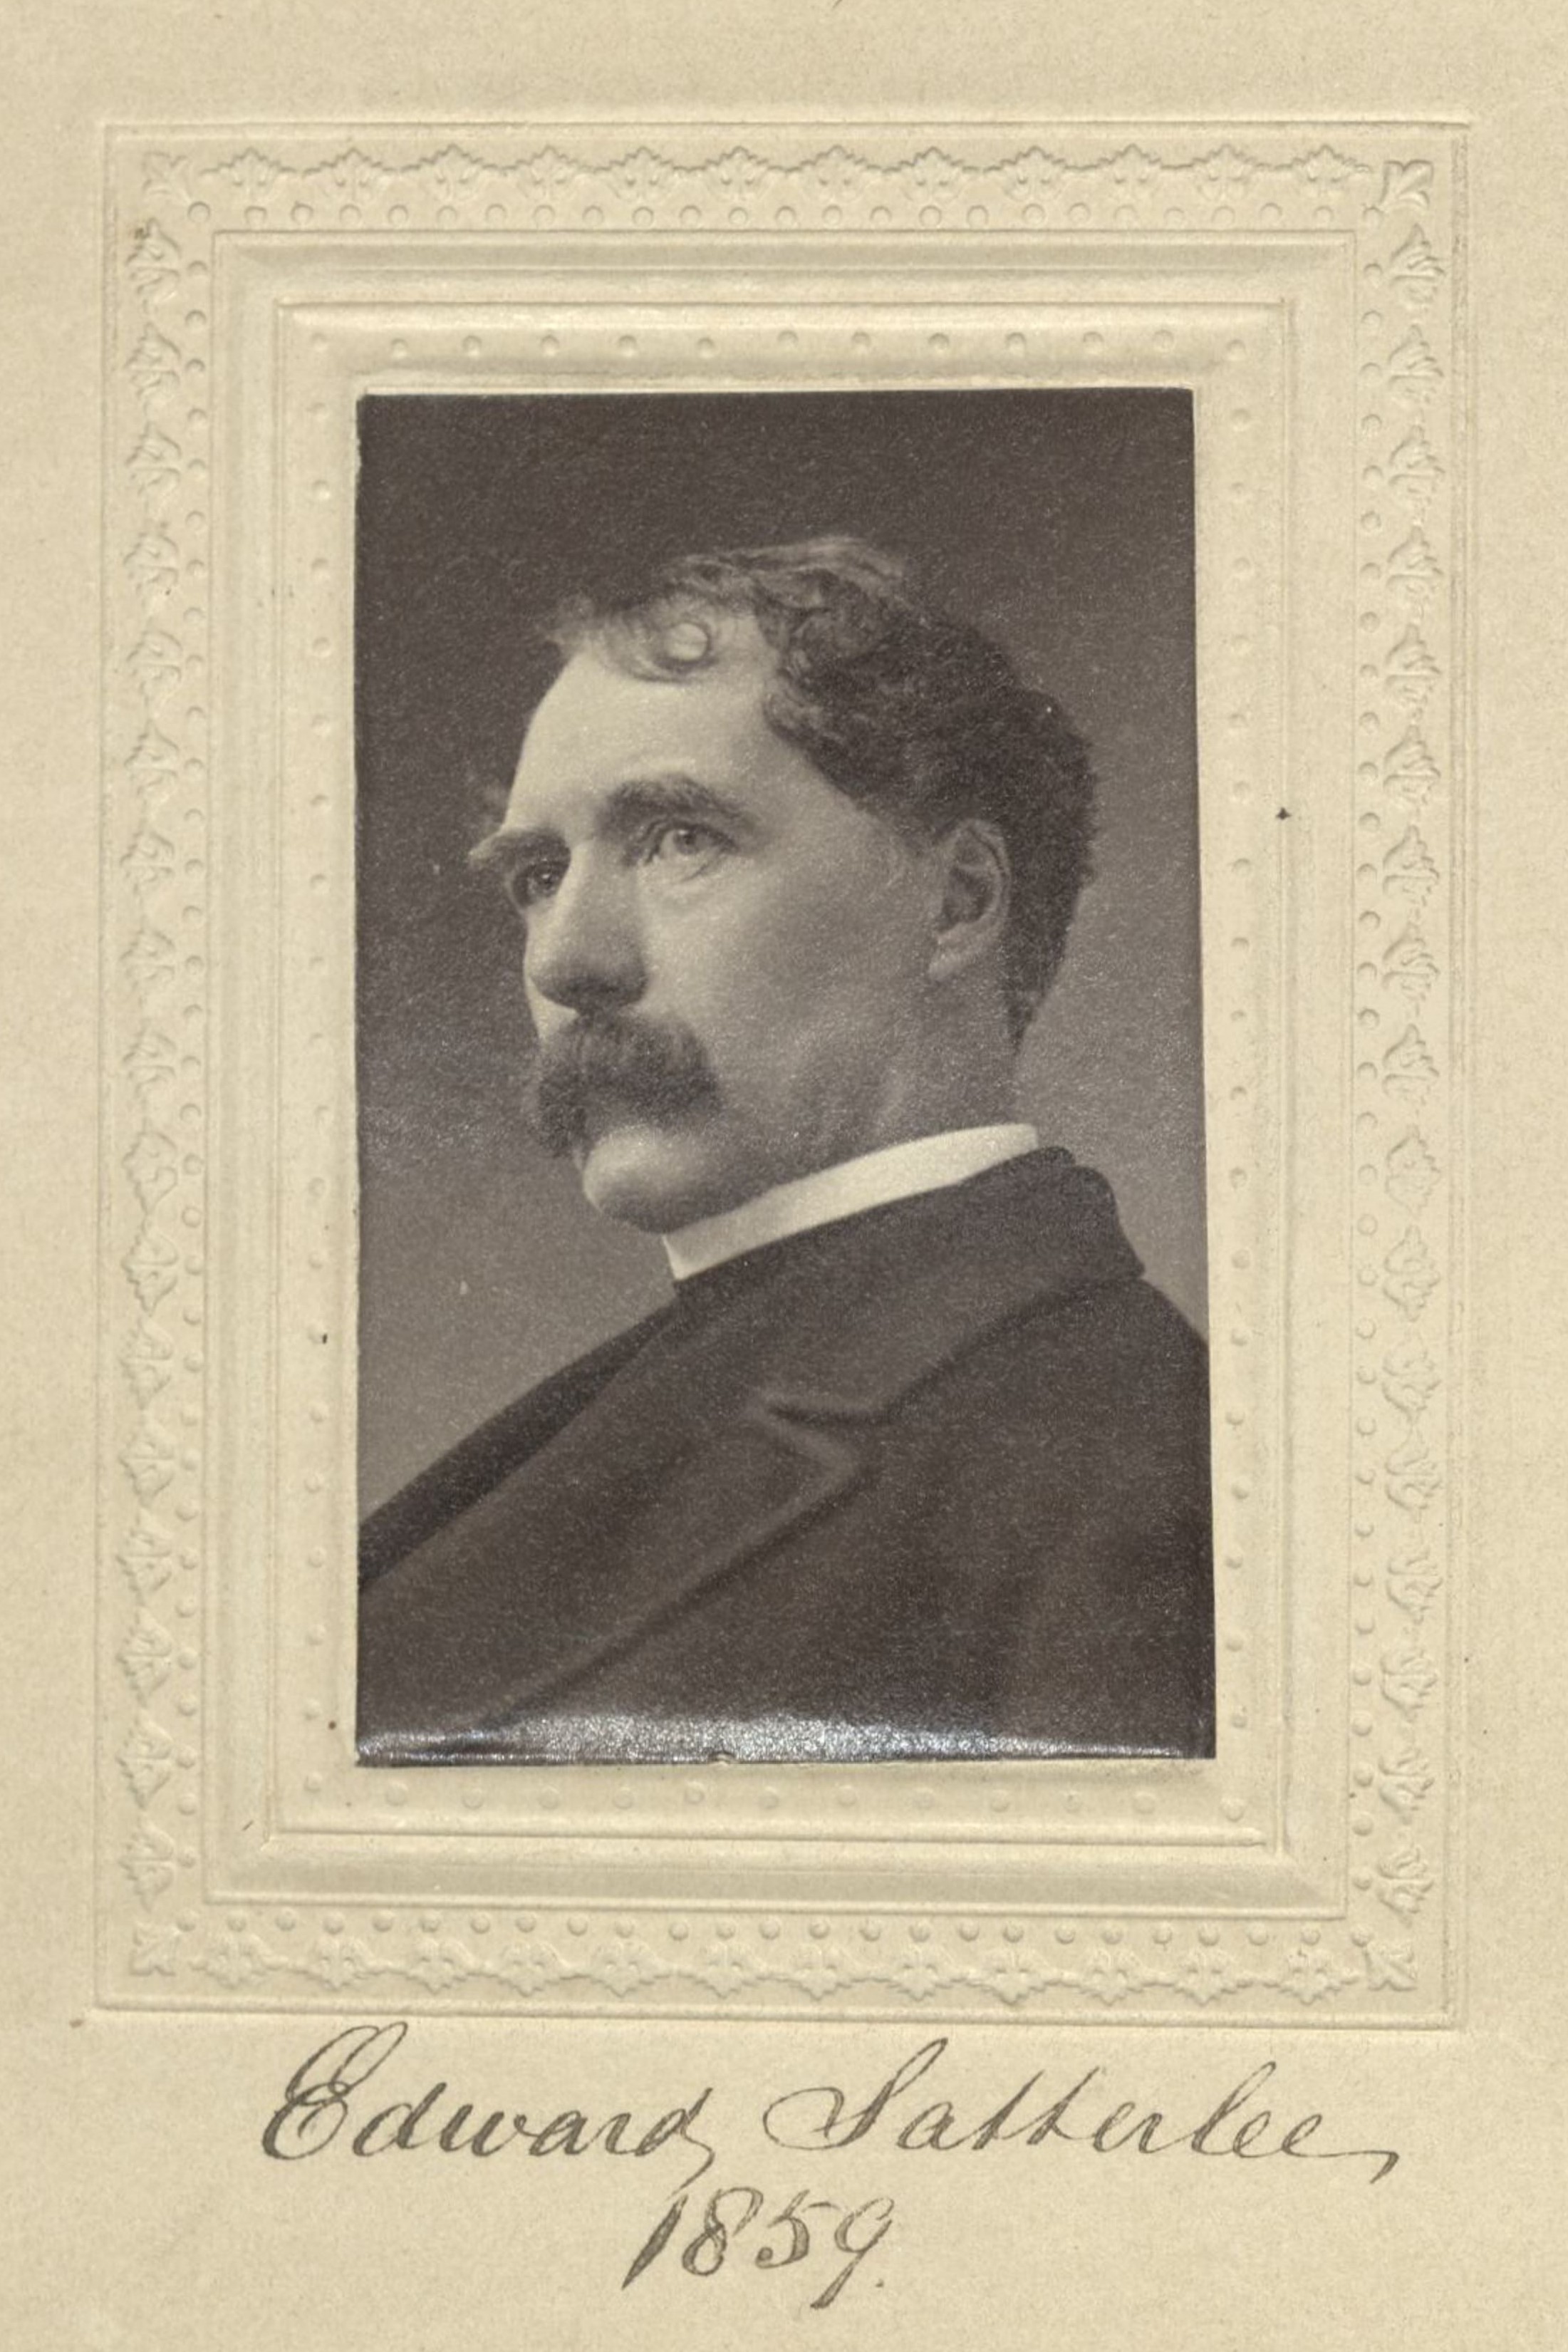 Member portrait of Edward Satterlee